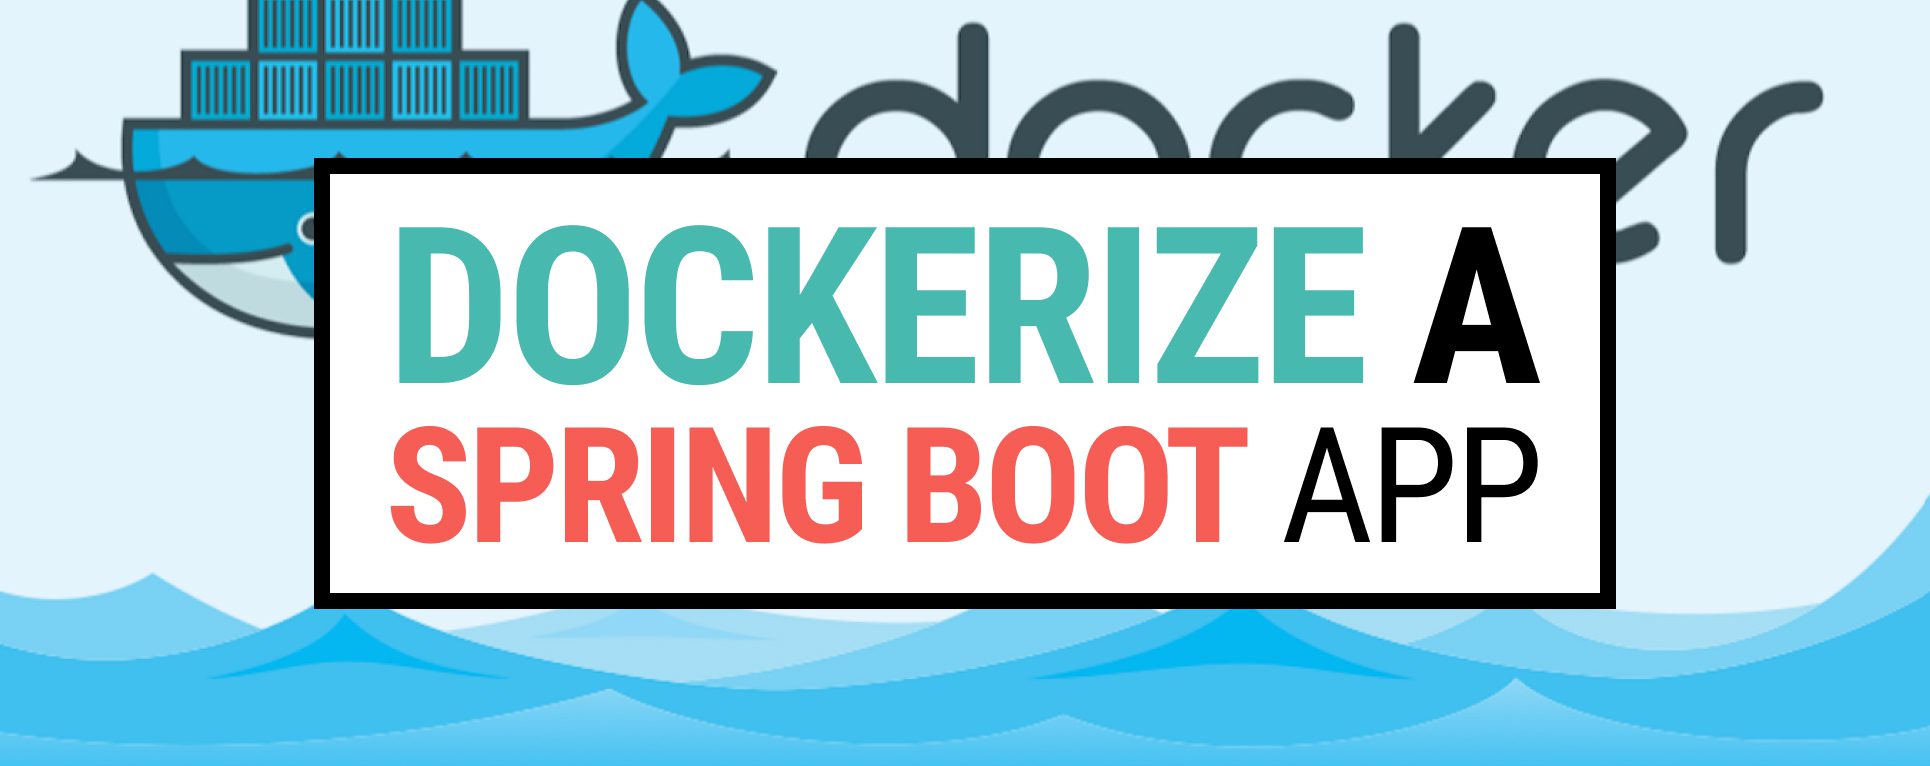 Dockerize a Spring Boot Application